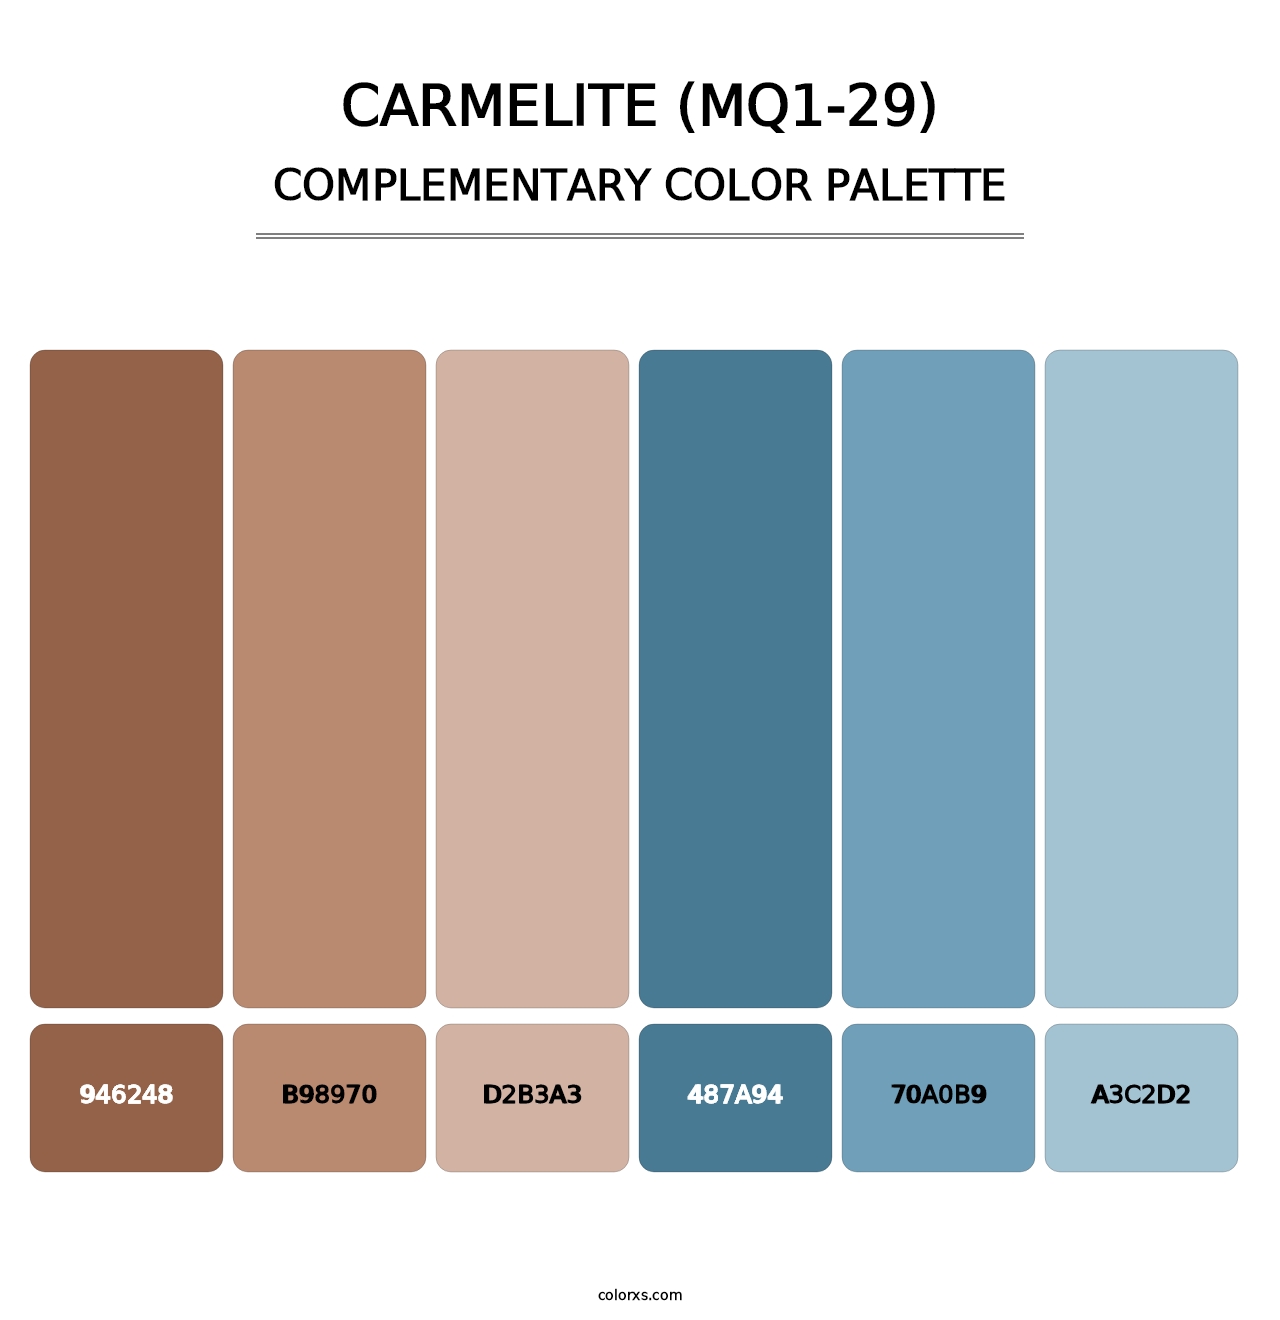 Carmelite (MQ1-29) - Complementary Color Palette